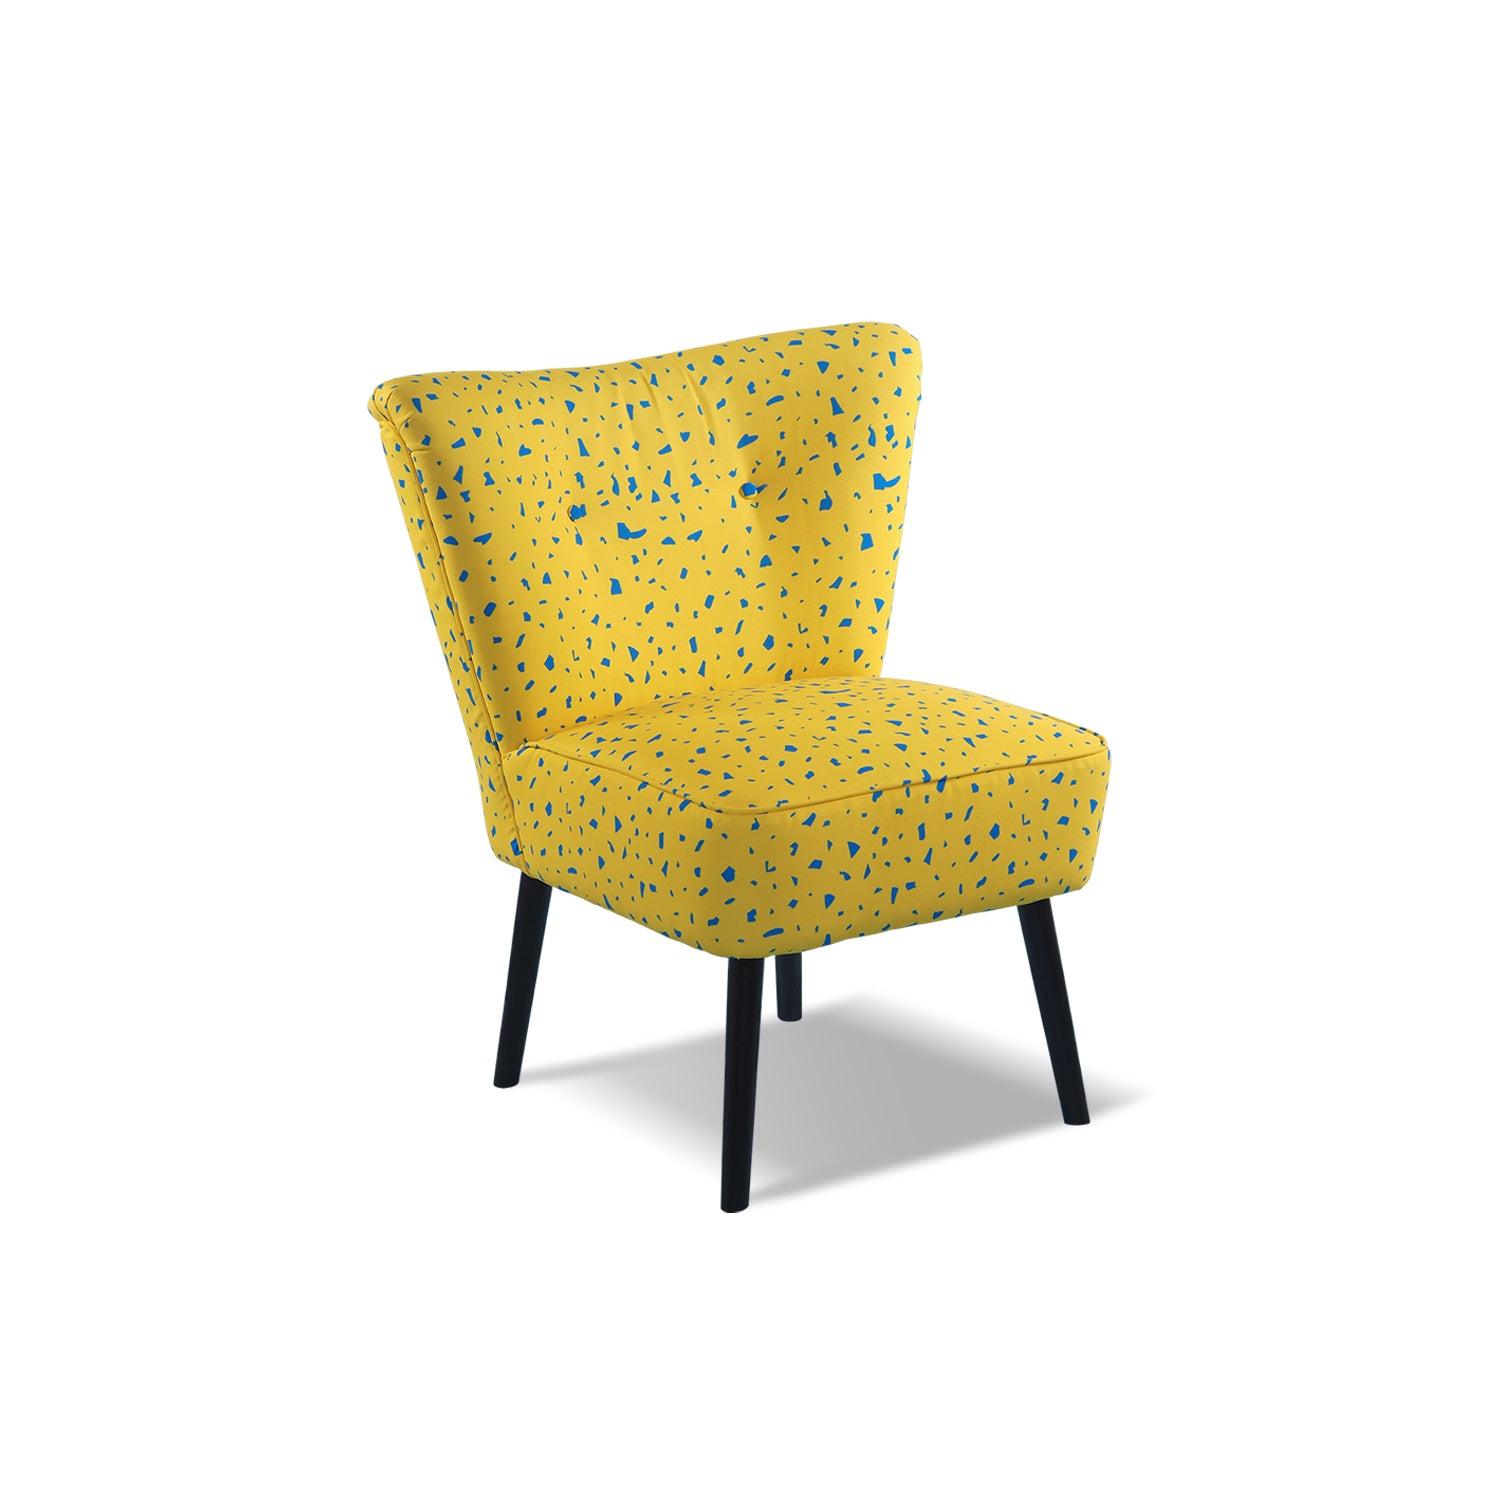 Yellow bg Cocktail Chair